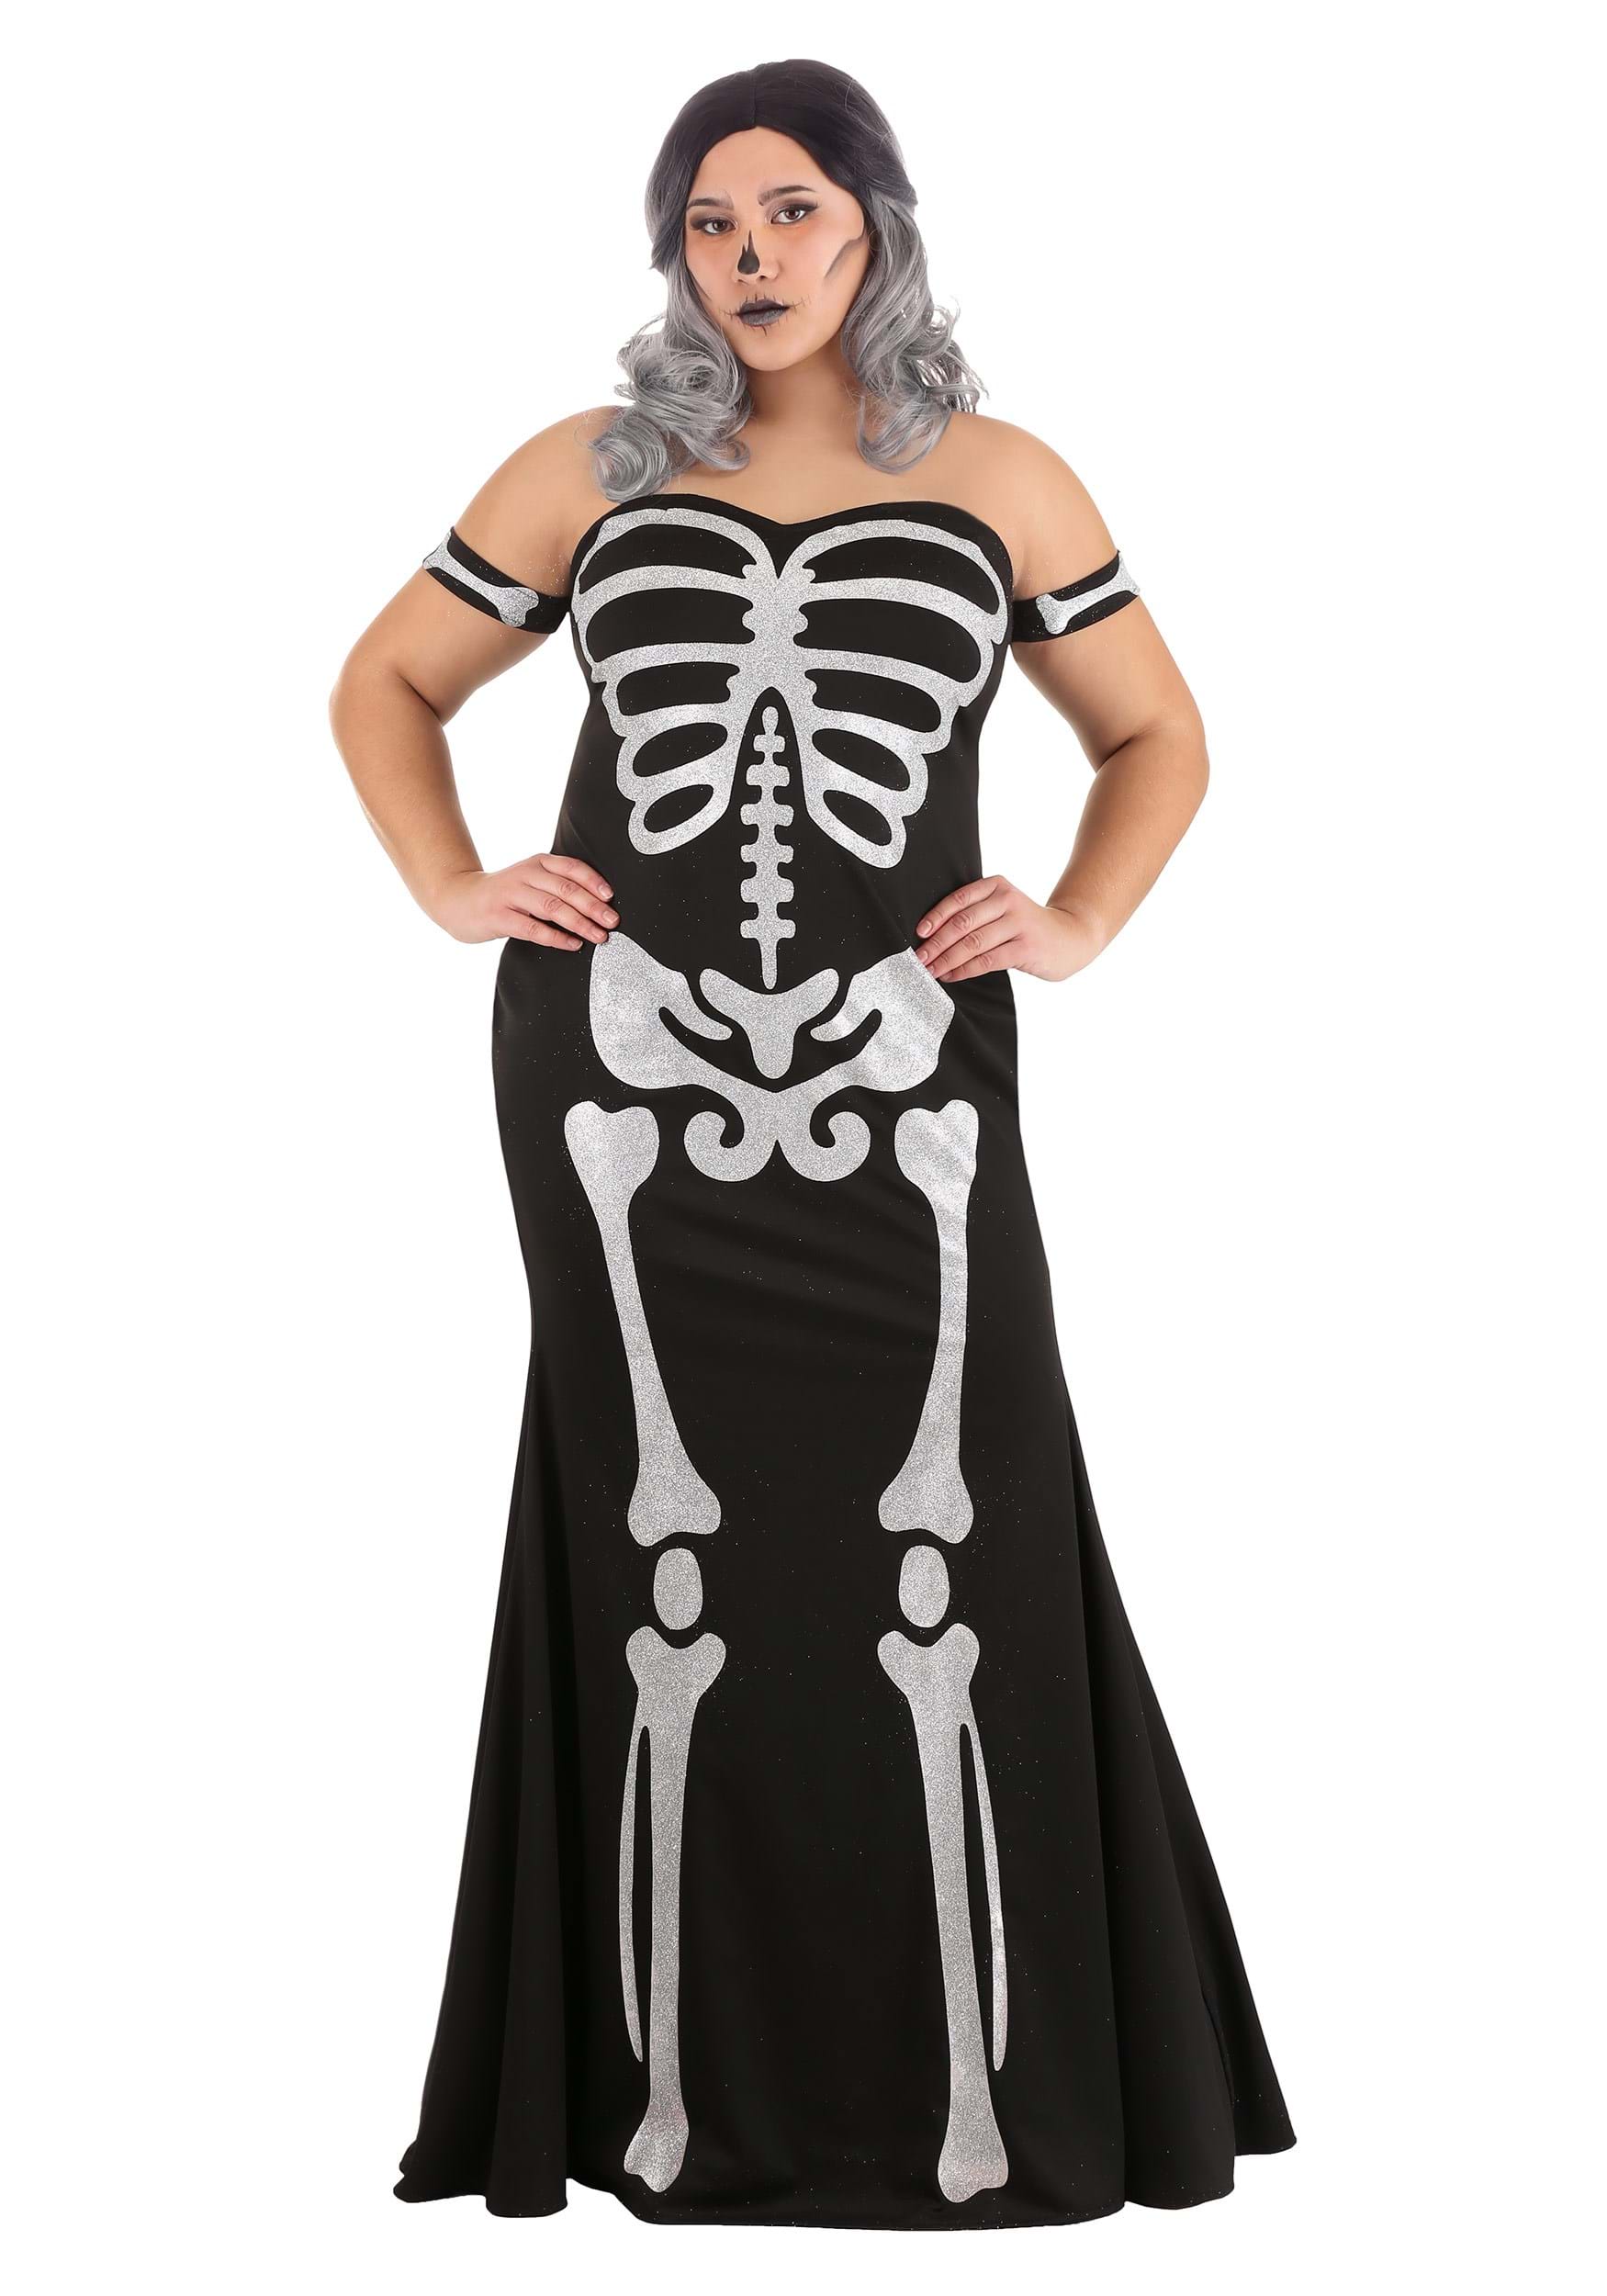 Photos - Fancy Dress Fashion FUN Costumes Women's Plus Size High  Skeleton Costume Black/Gra 